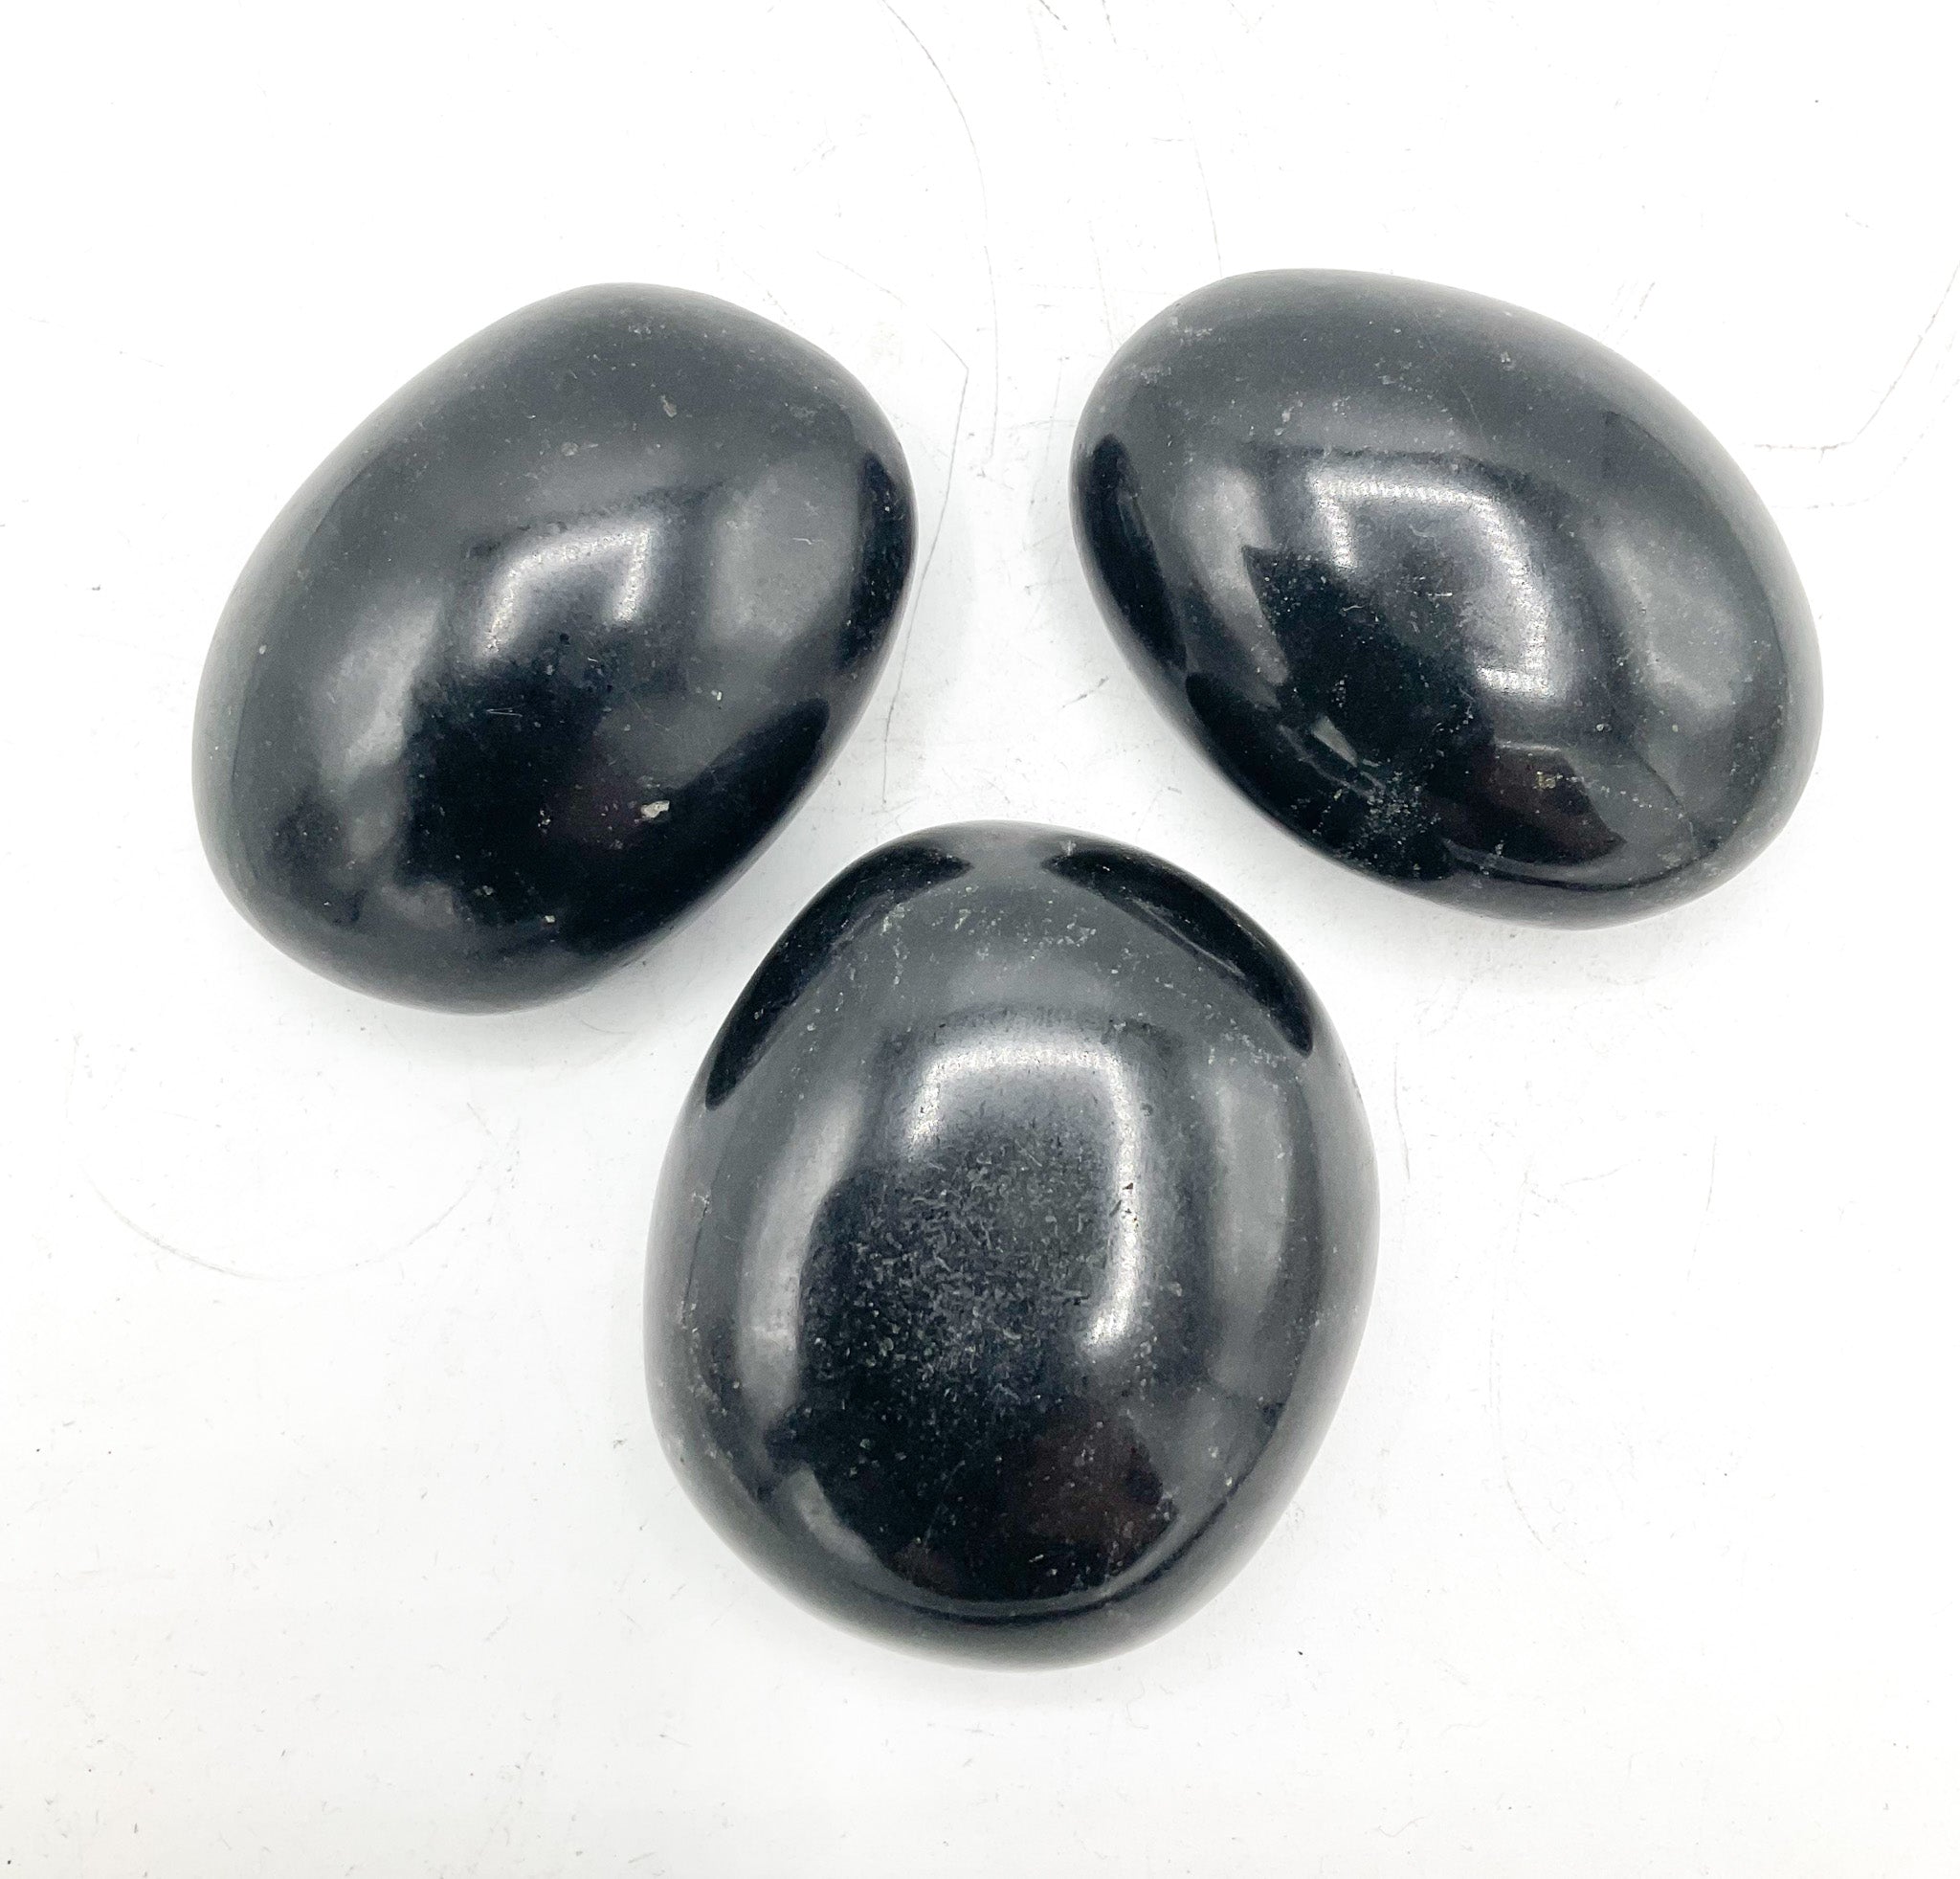 Black Tourmaline crystal healing palm stones